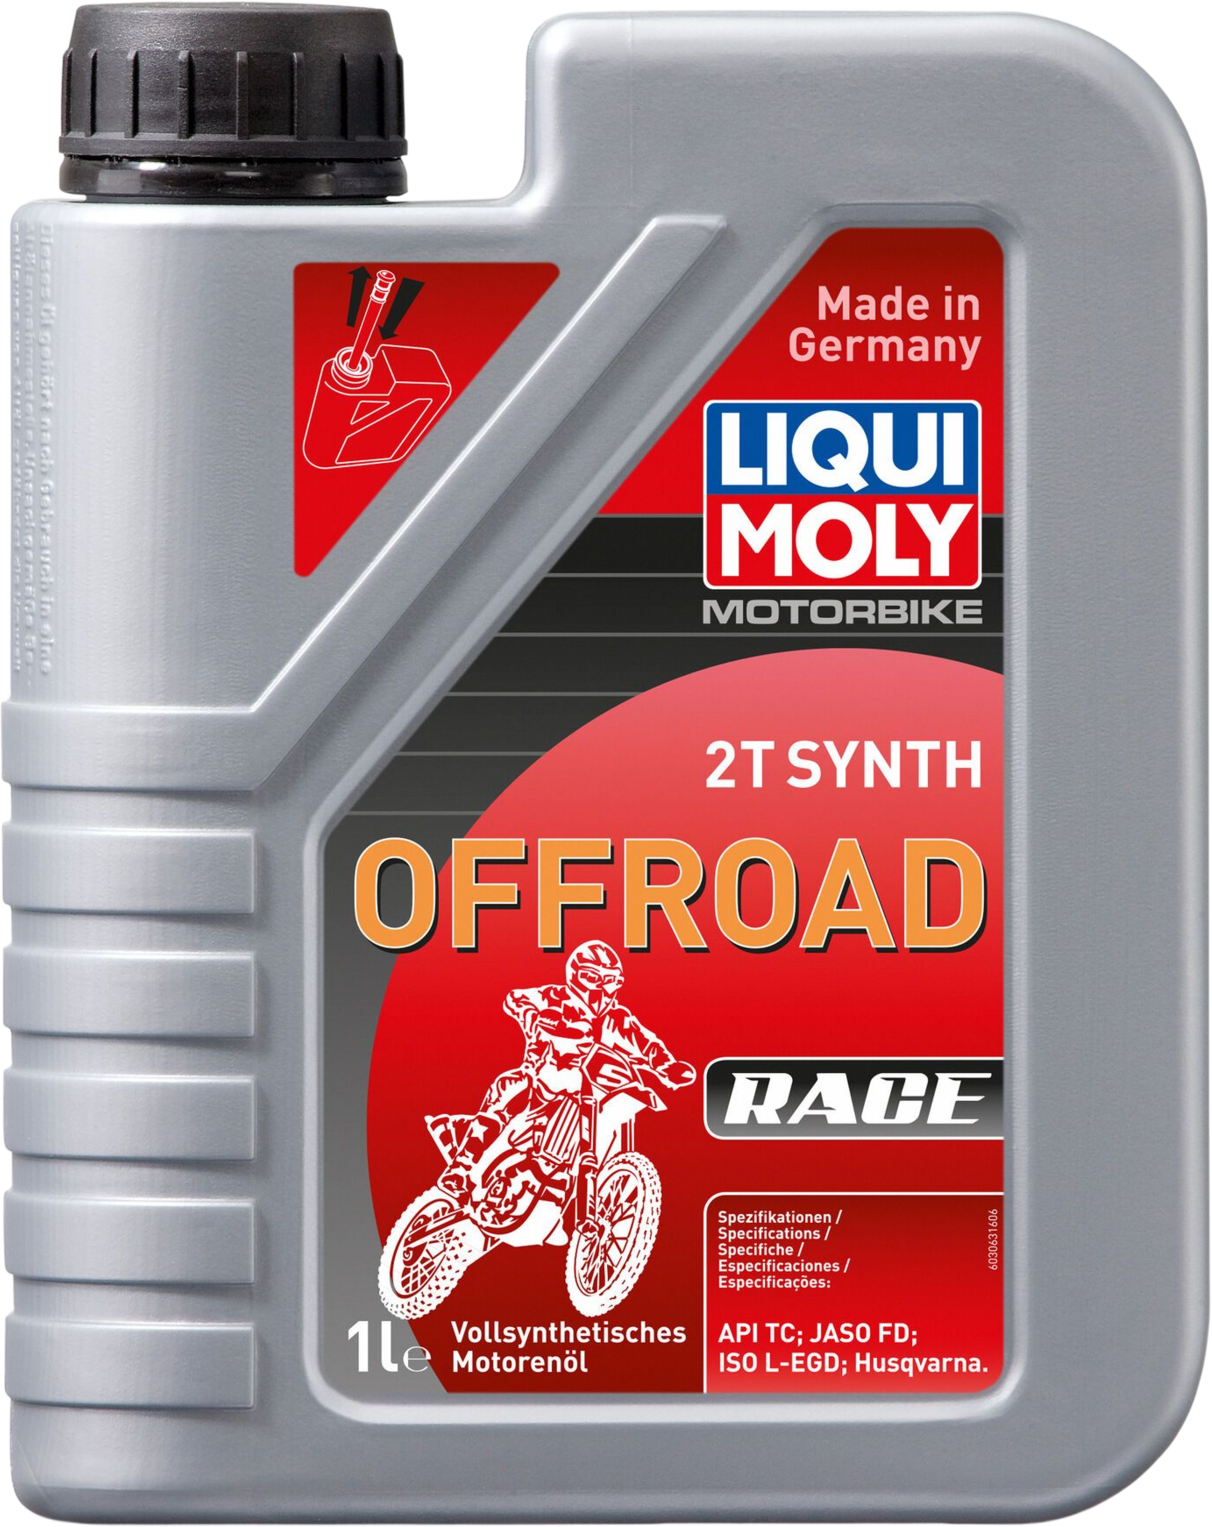 Liqui Moly Motorbike 2T Synth Offroad Race, 1 lt